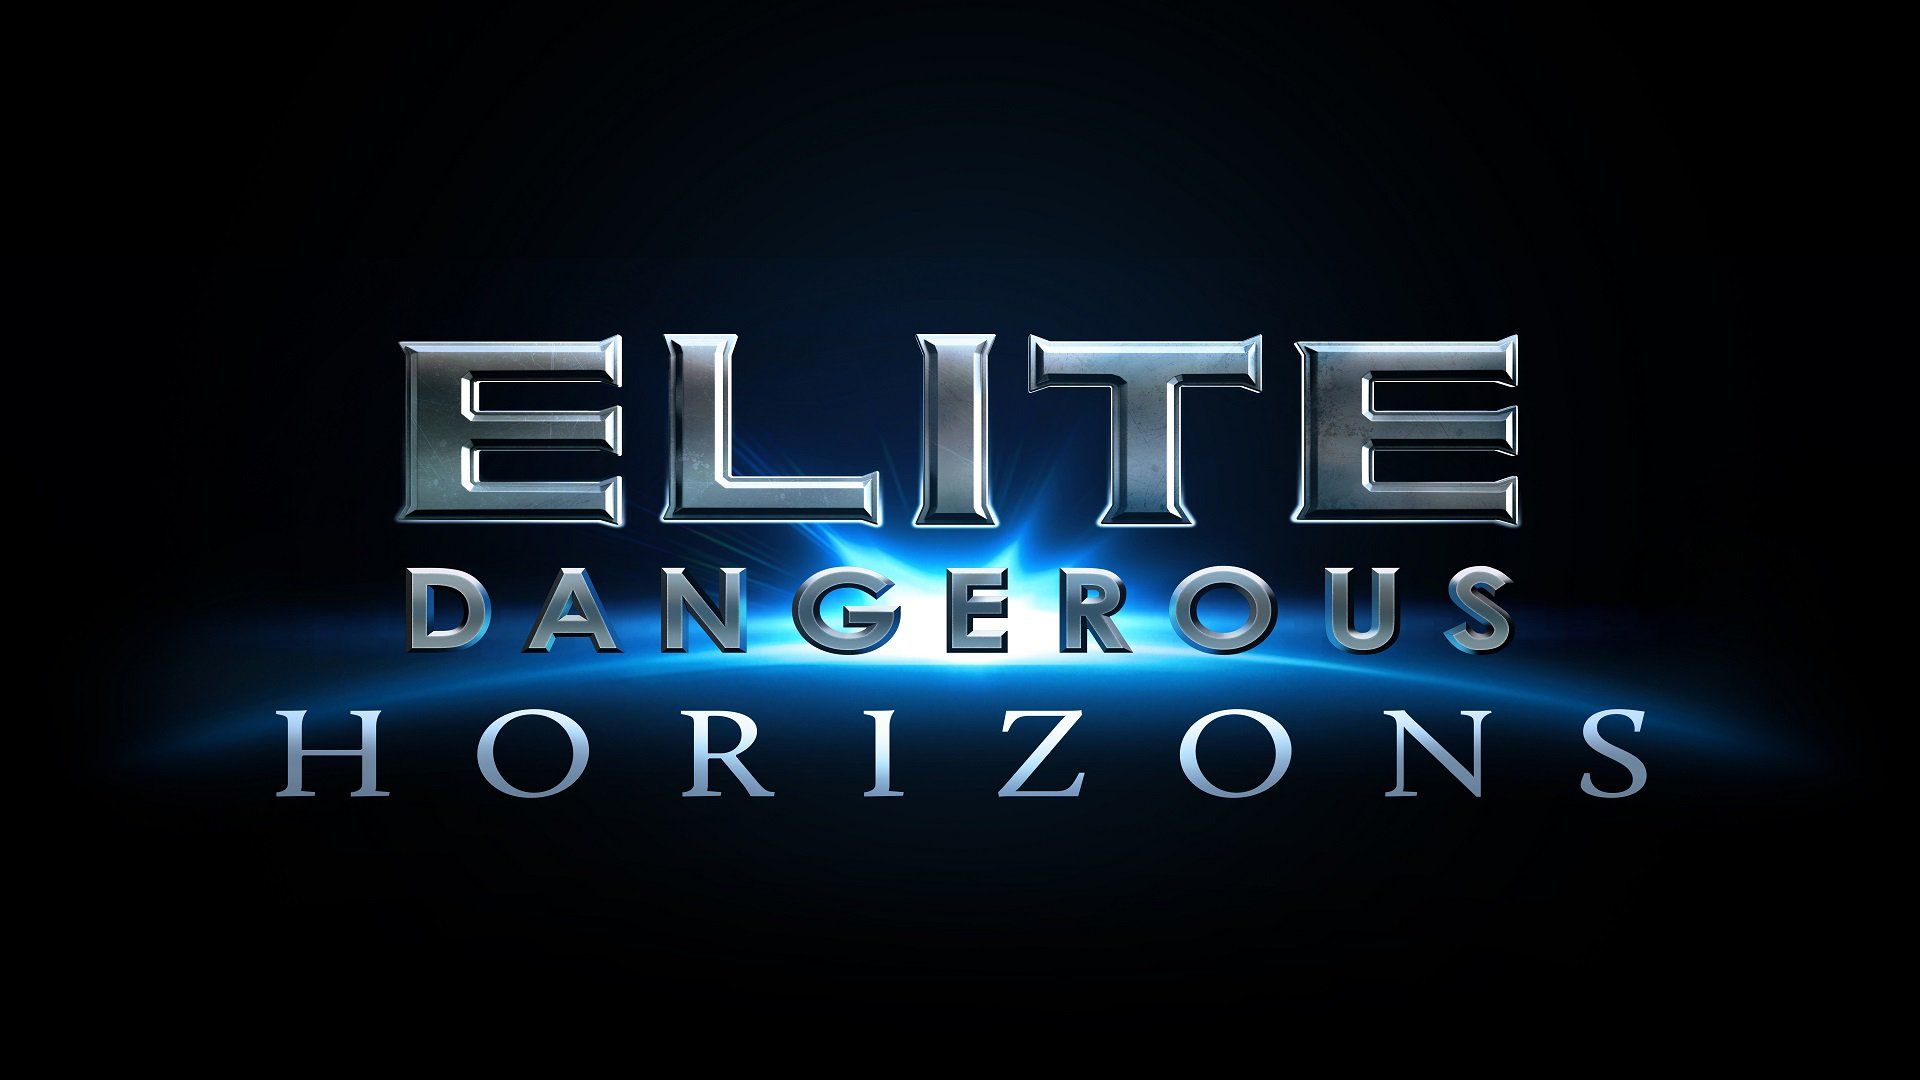 Elite Dangerous Horizons